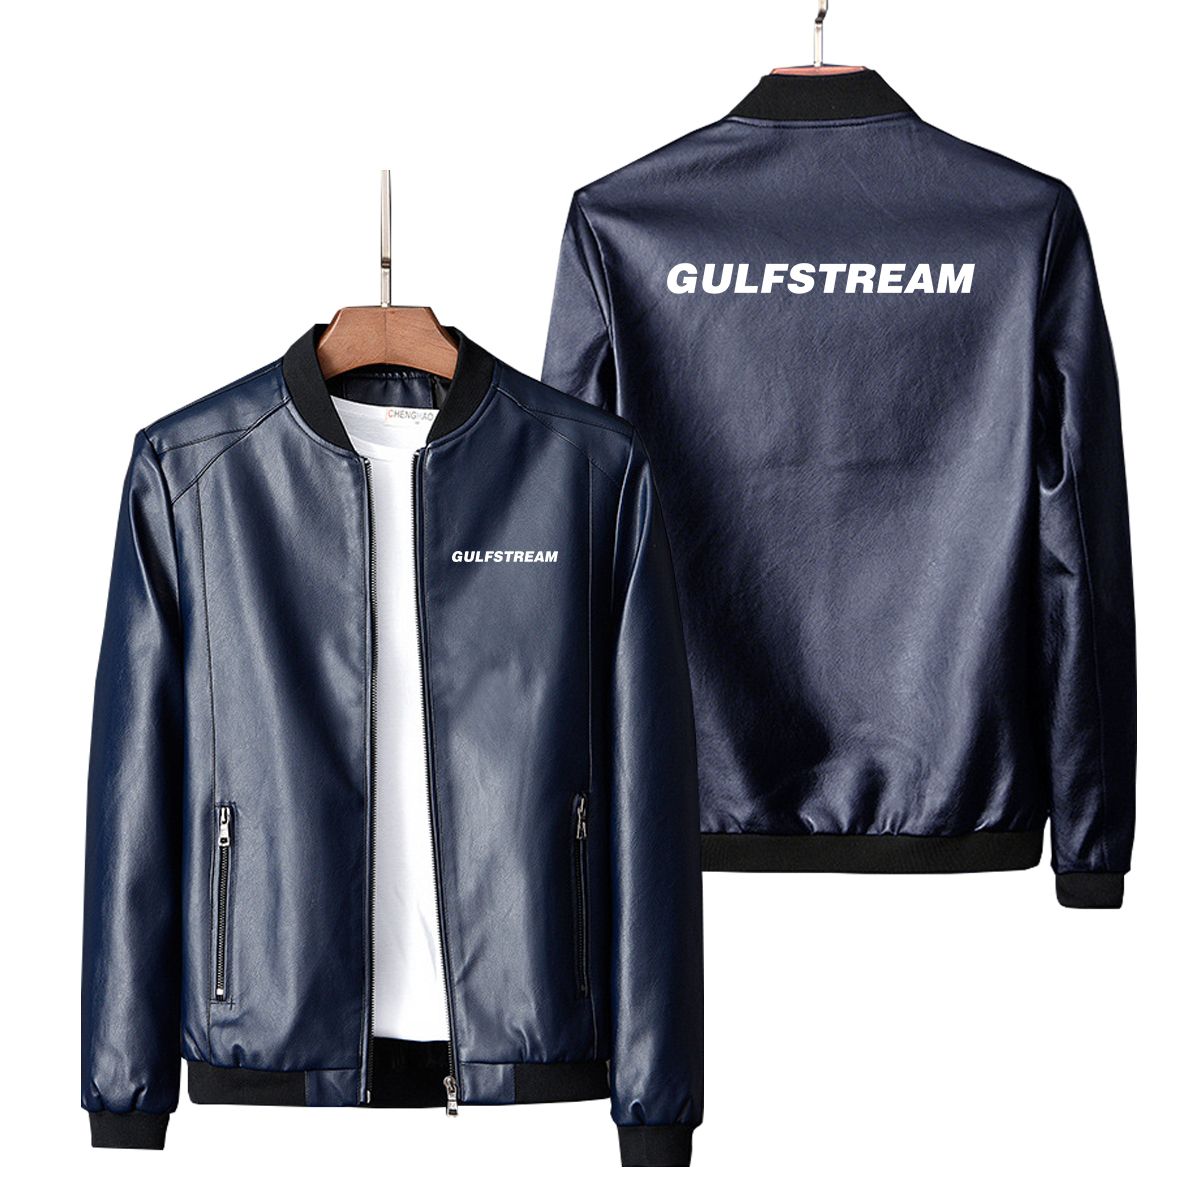 Gulfstream & Text Designed PU Leather Jackets